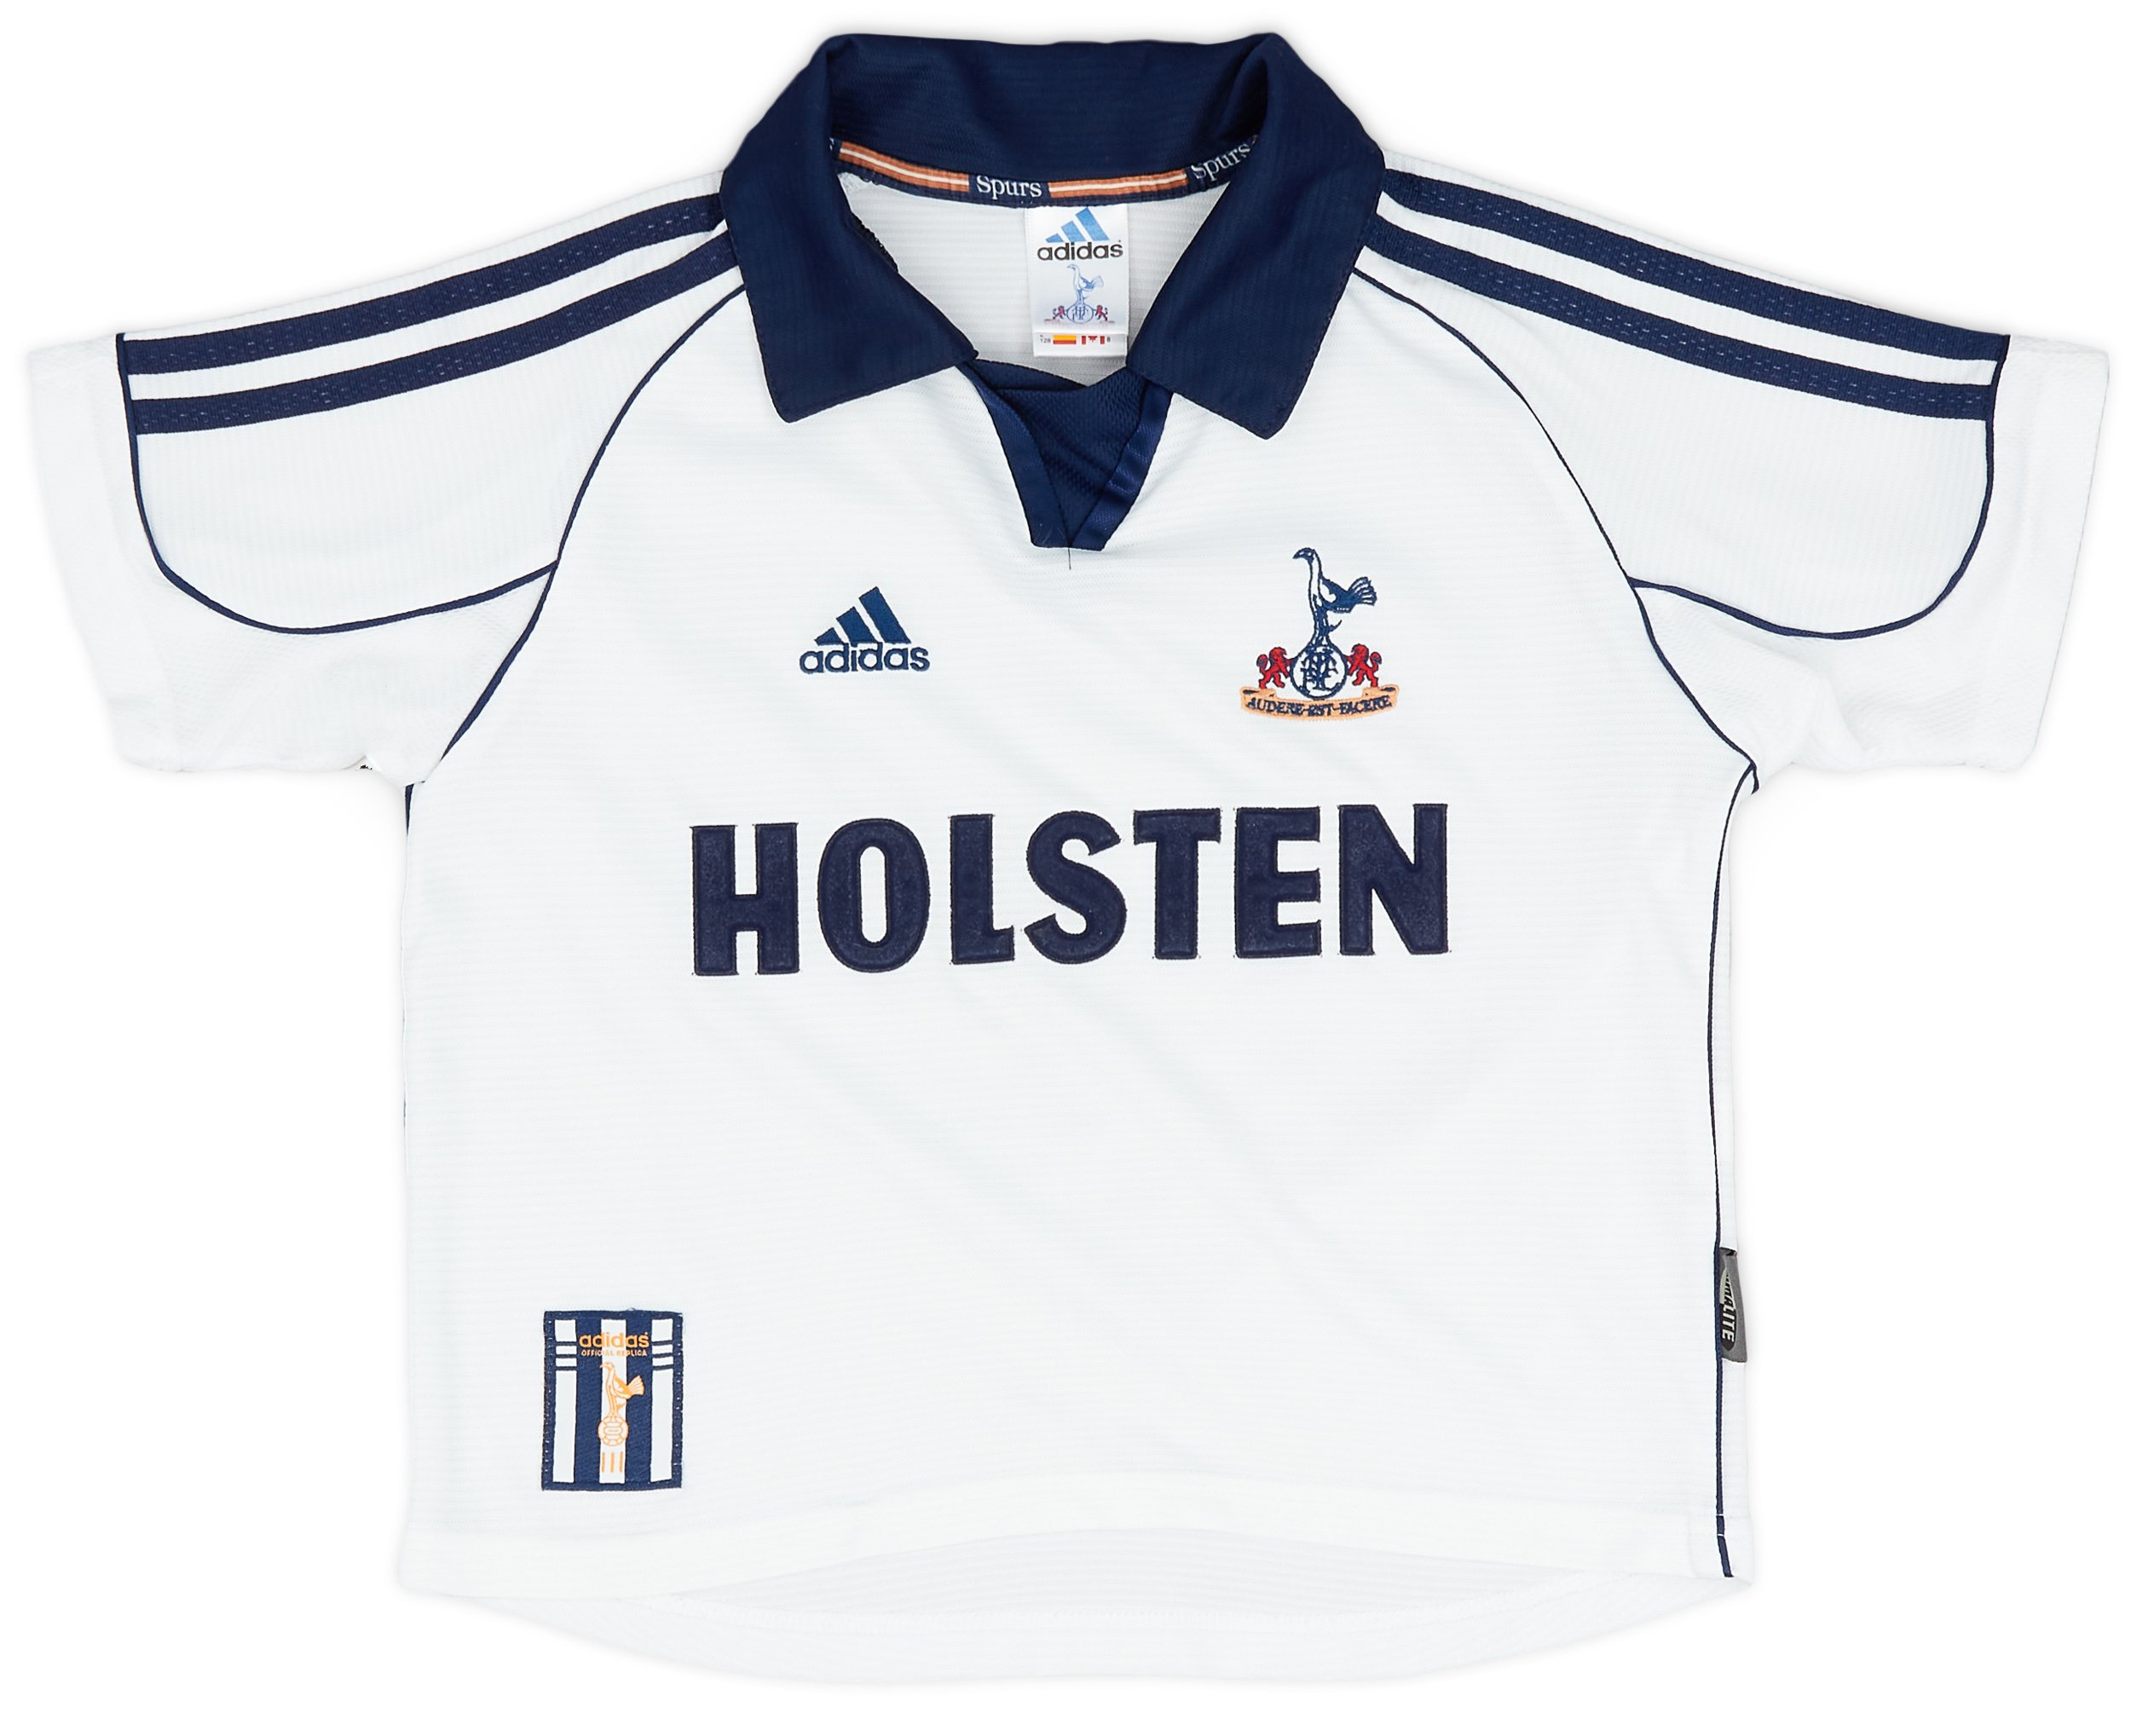 Tottenham Hotspur Home football shirt 1999 - 2001. Sponsored by